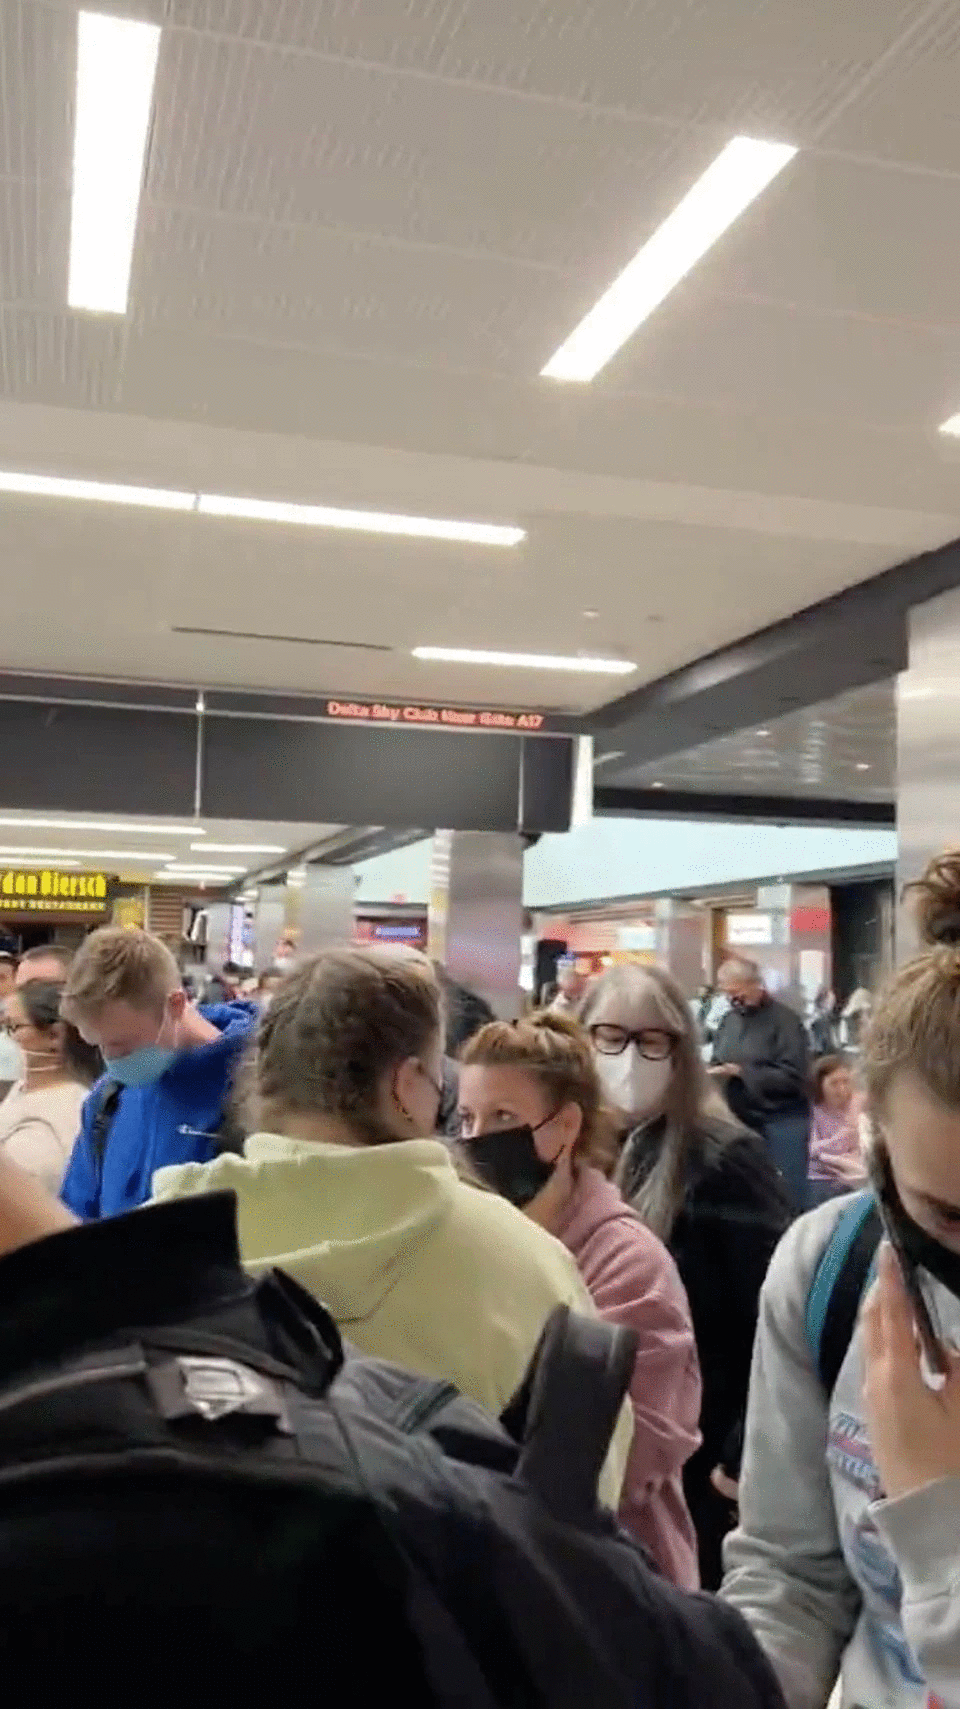 Chaos at Atlanta airport as convicted felon's gun goes off, 3 hurt: police